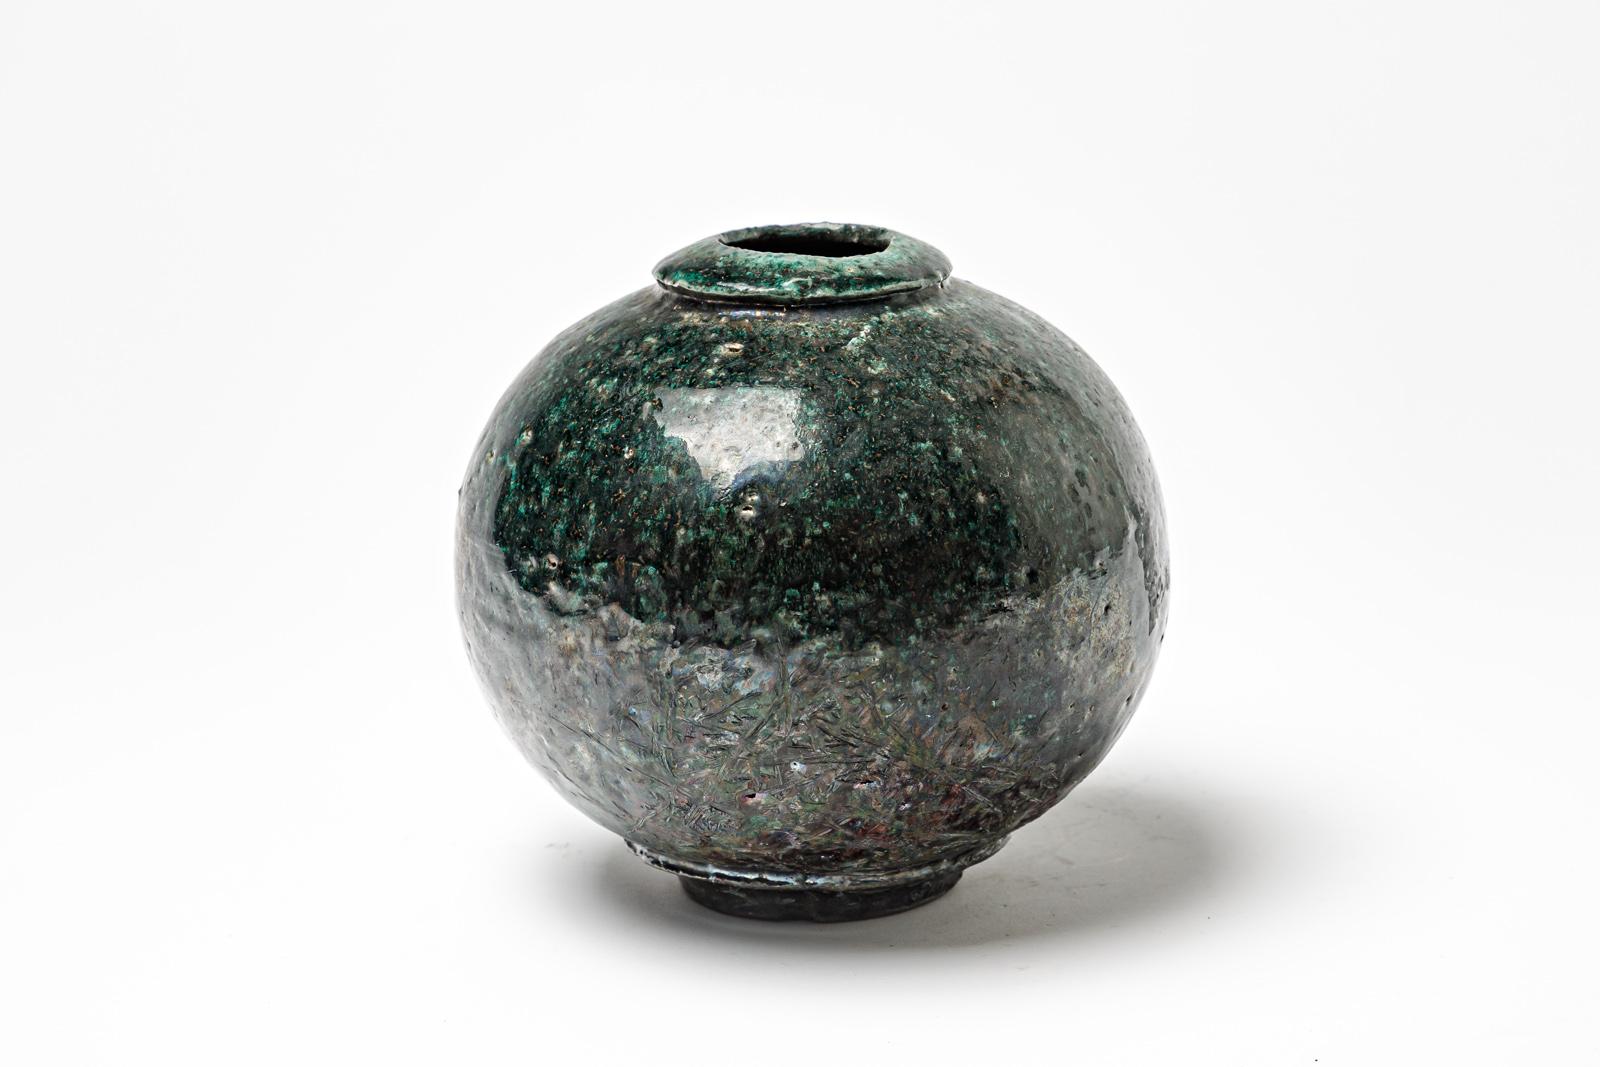 Green and black glazed ceramic vase by Gisèle Buthod Garçon. 
Raku fired. Artist monogram under the base. Circa 1980-1990. 
H : 6.3’ x 5.1’ inches.